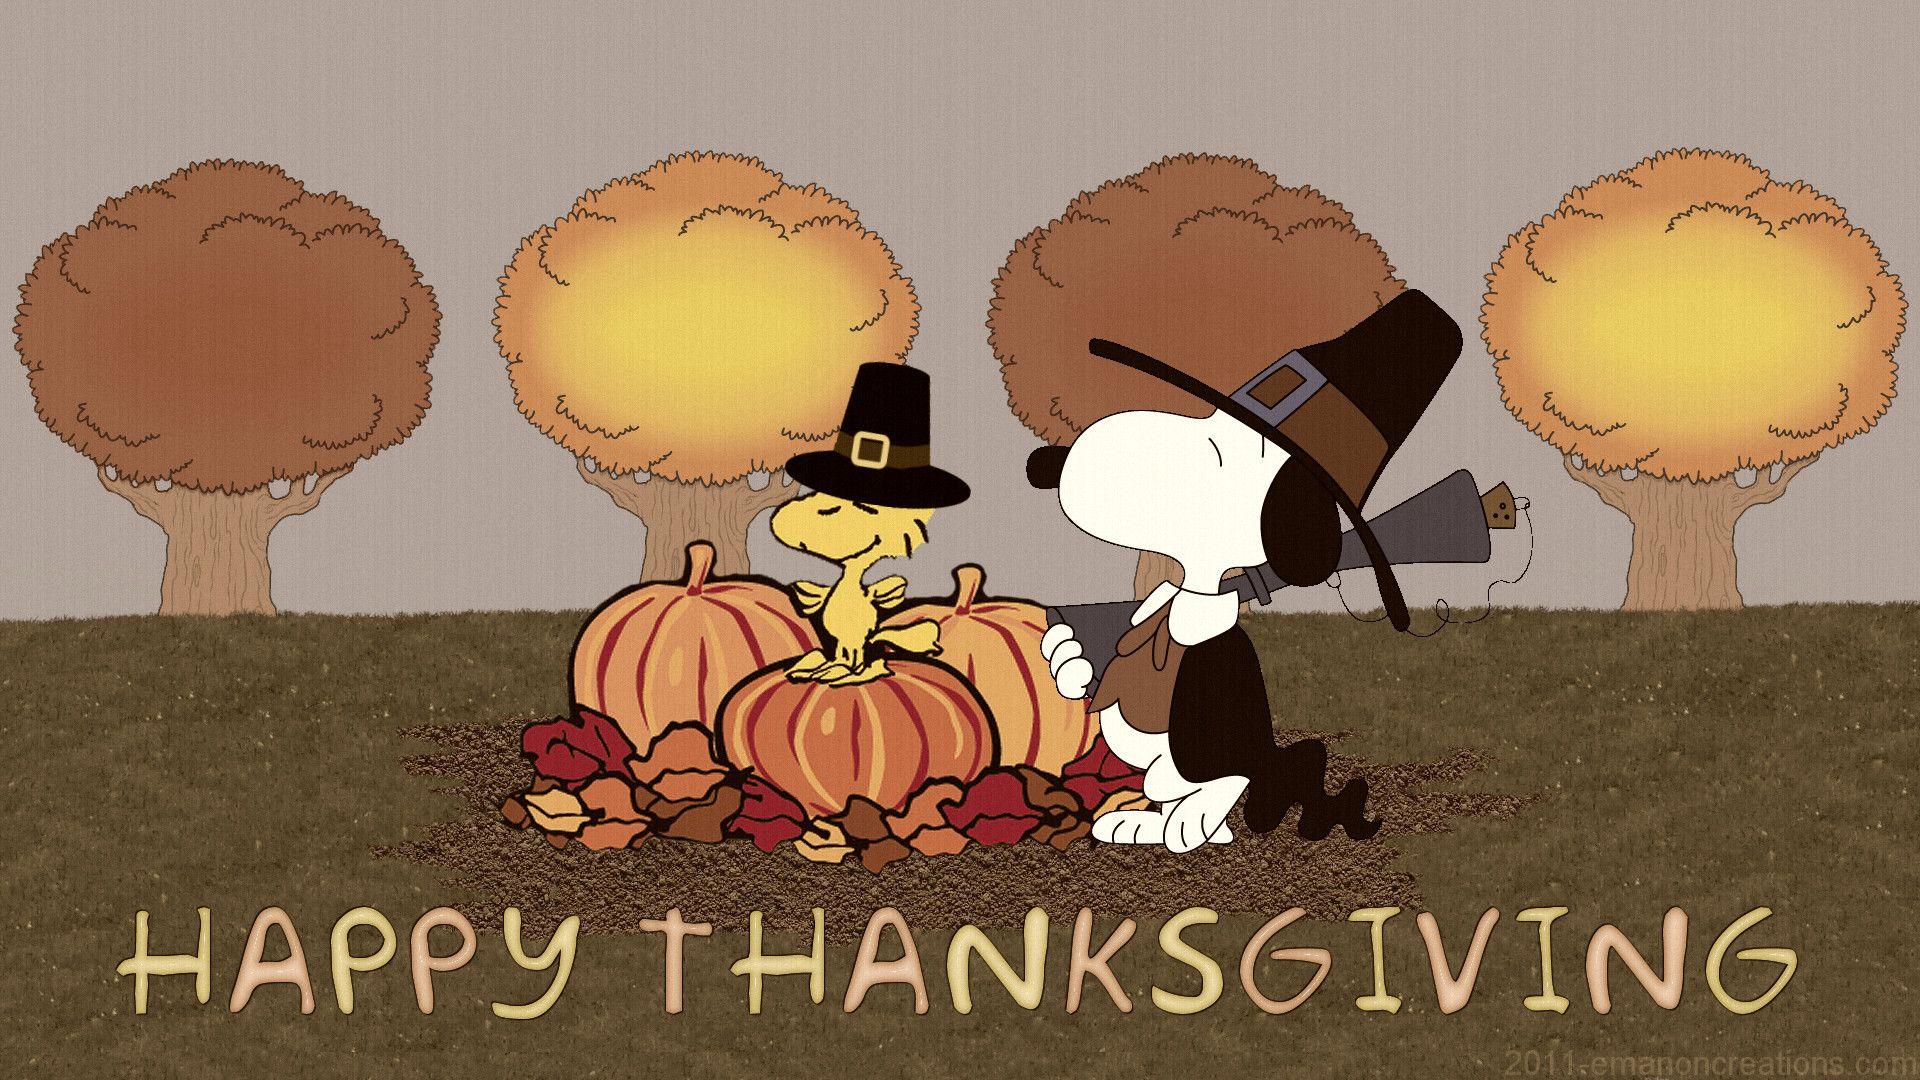 Charlie Brown Thanksgiving Desktop Wallpapers